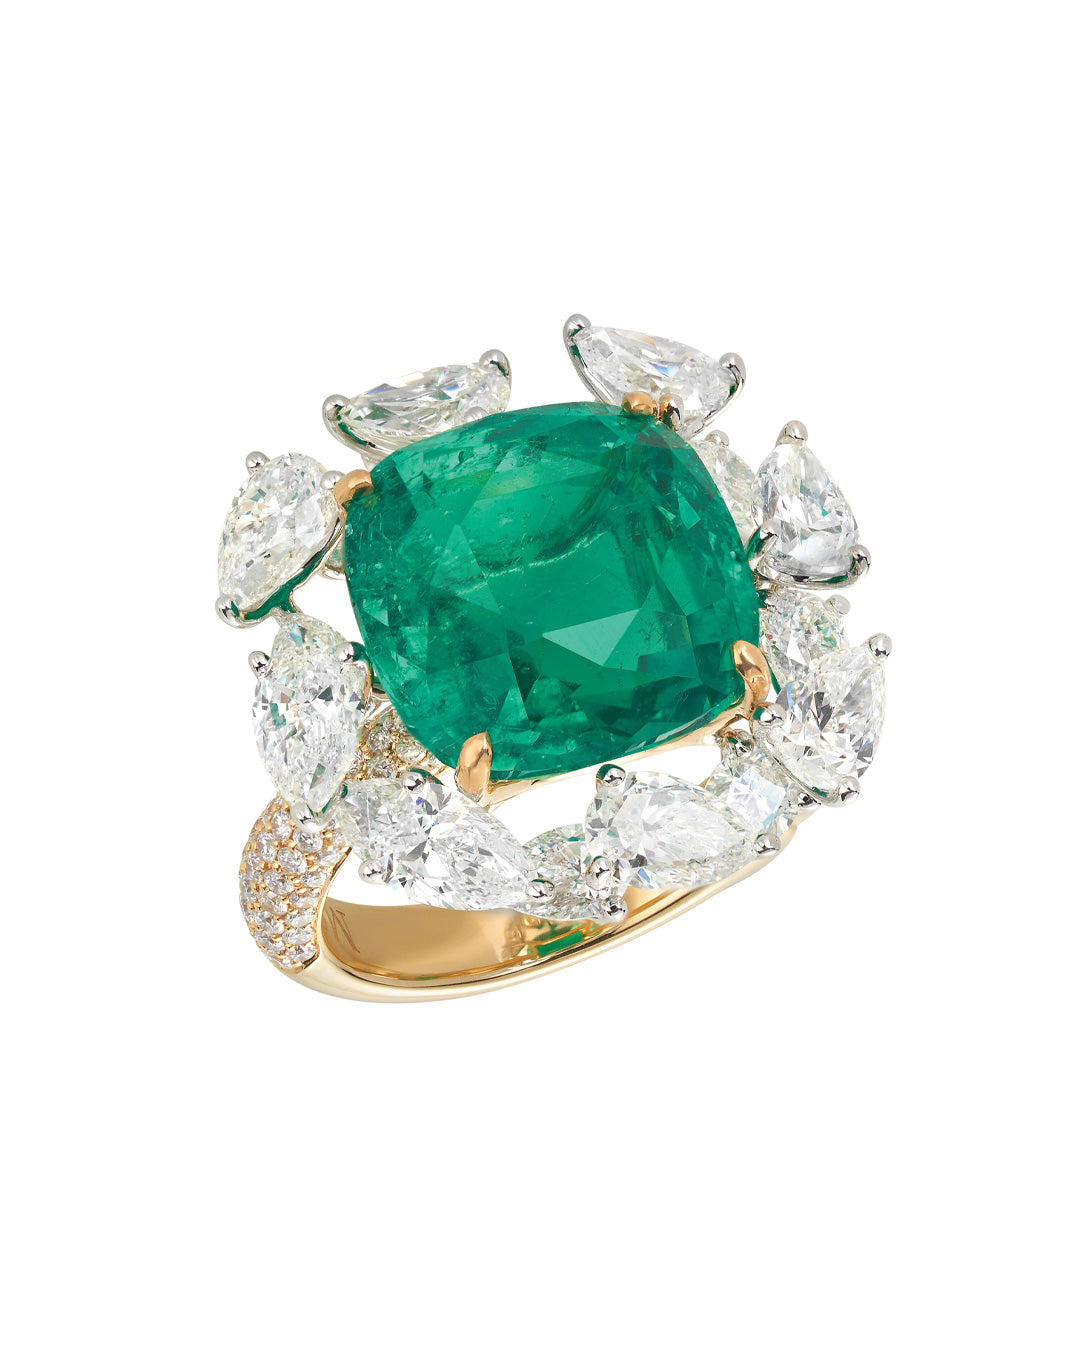 11.15ct Emerald and Diamond Ring